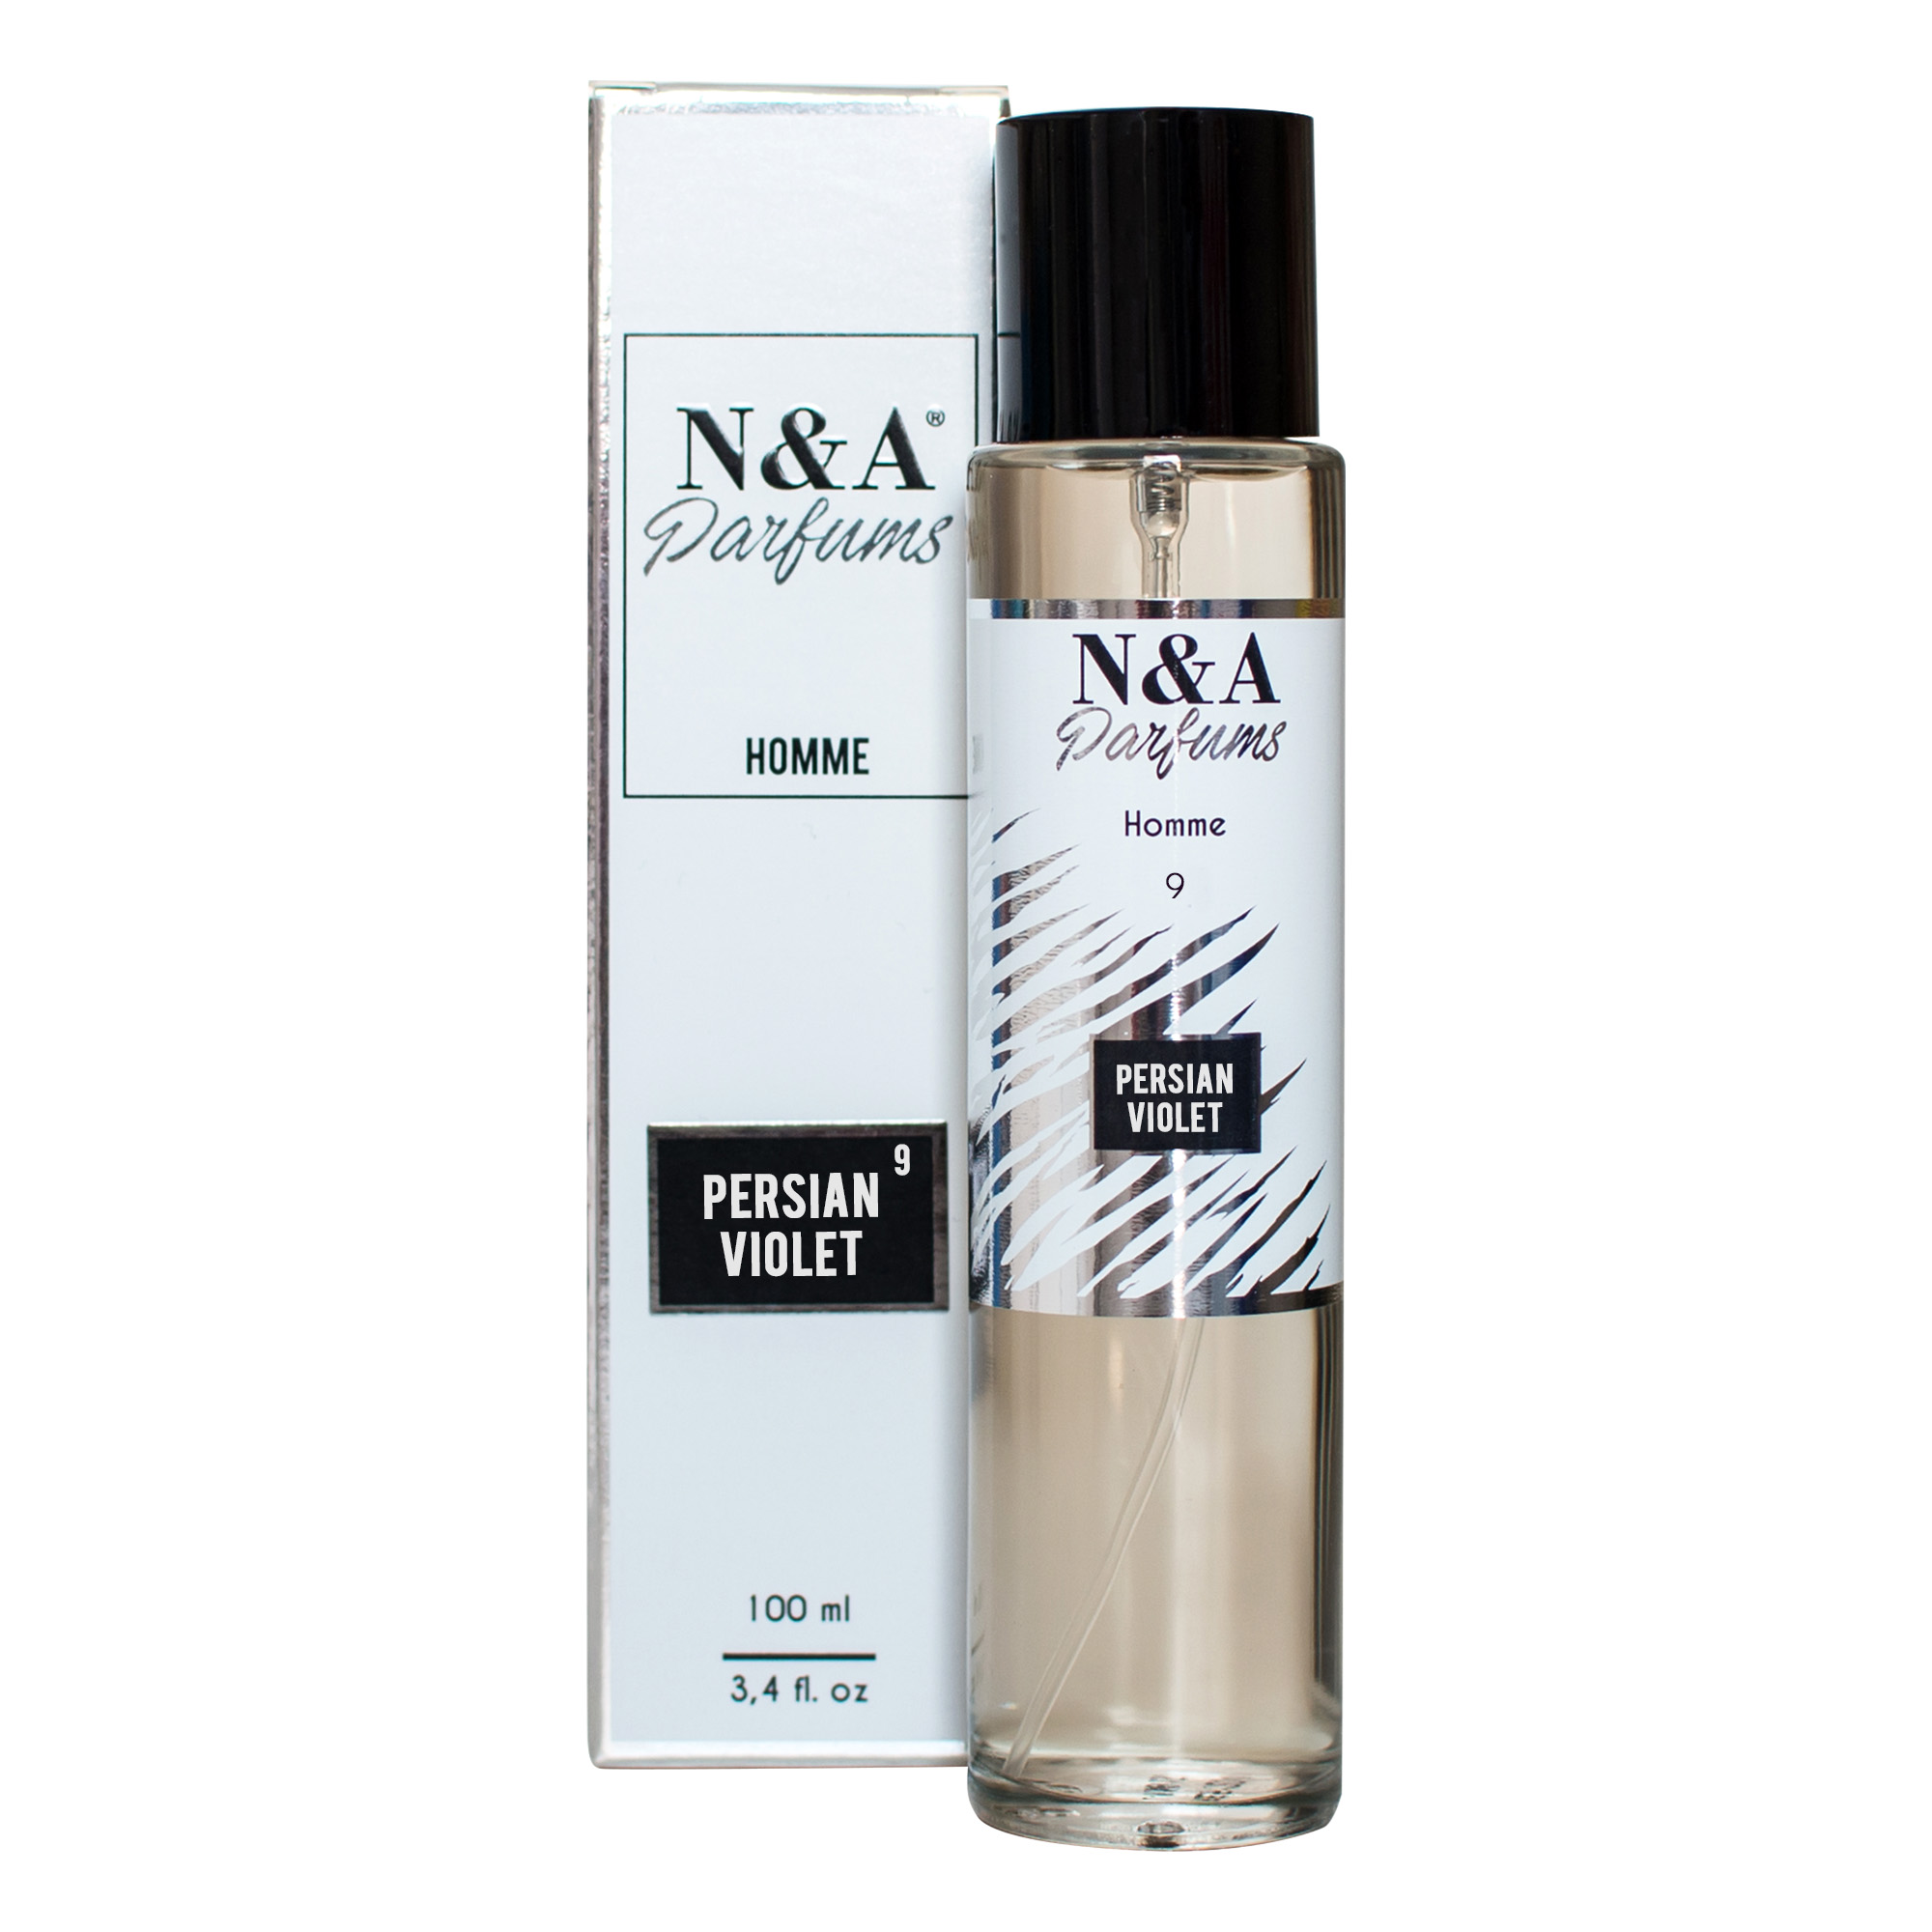 Perfume N&A 9 100ml - Se Gosta de ARMANI EMPORIO HE experimente a Nossa Fragrância